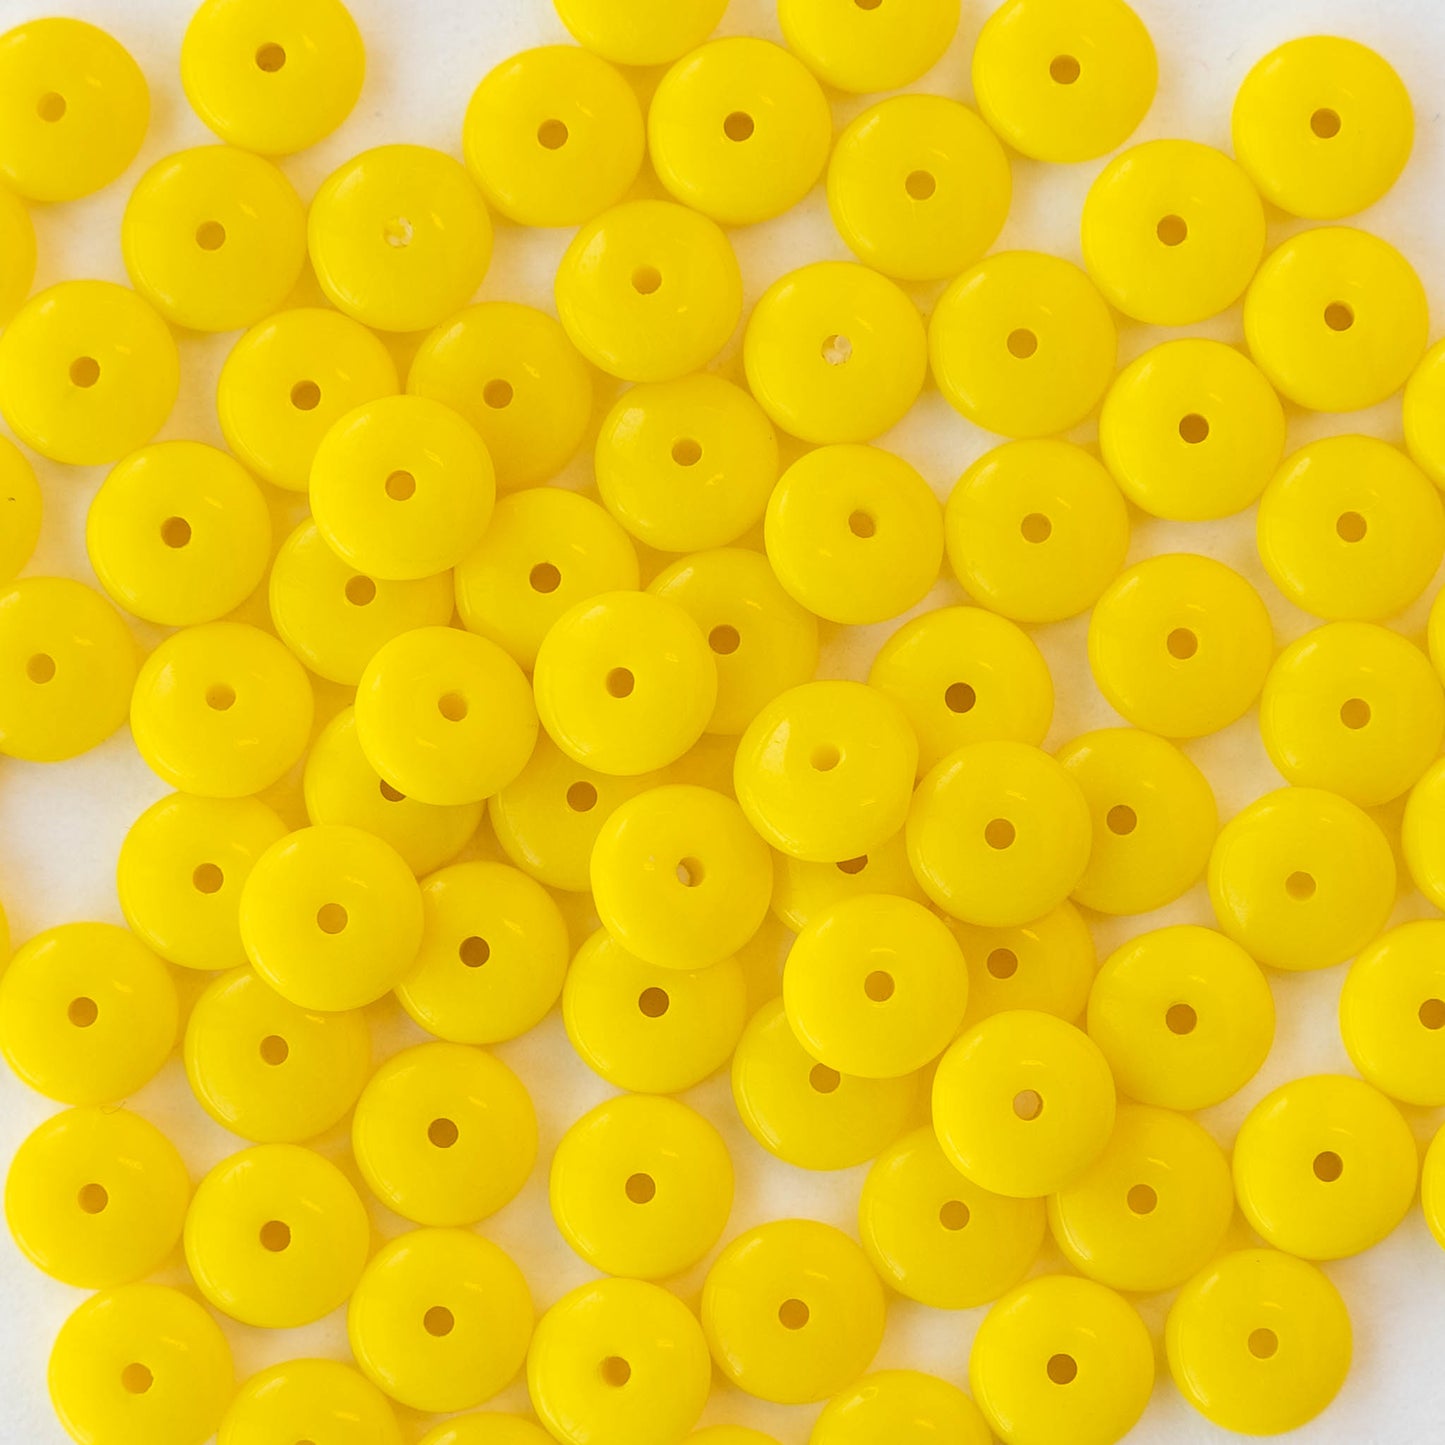 6mm Glass Rondelle Beads - Opaque Lemon Yellow - 50 Beads